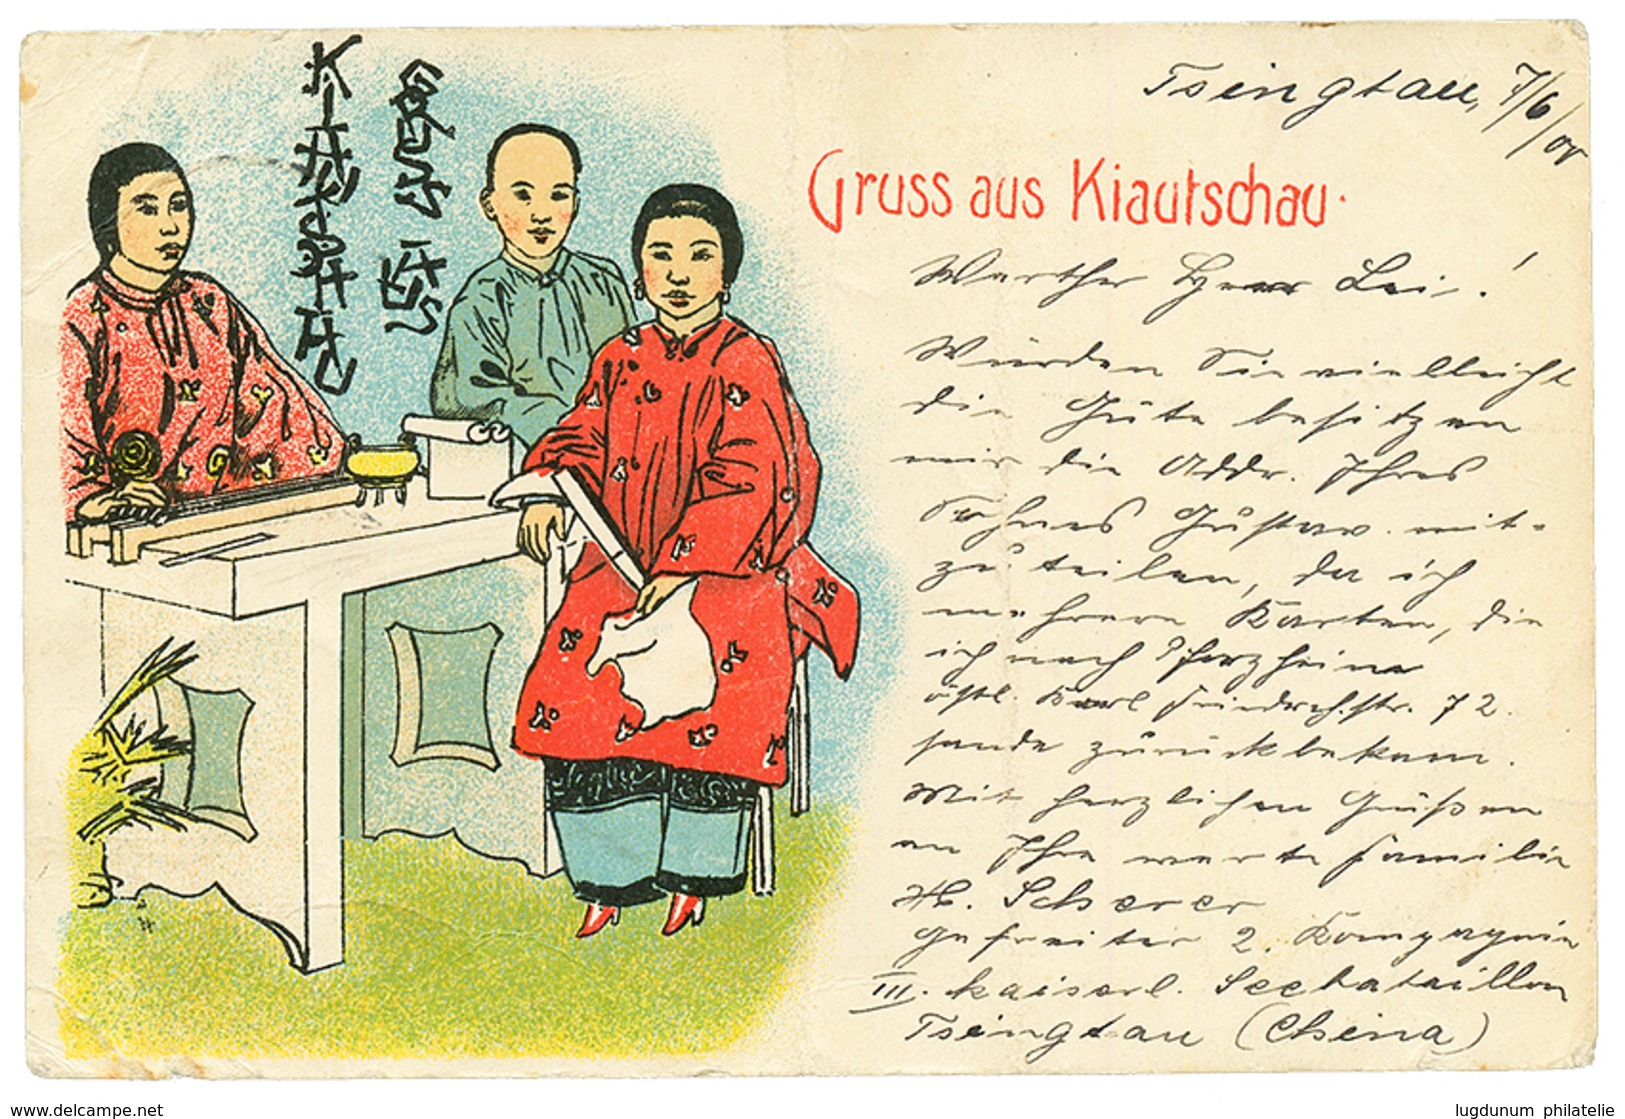 1900 5pf On 10pf (n°1 IIb) Canc. TSINGTAU On Card (crease) "GRUSS AUS KIAUTSCHAU" In Color. Vf. - Kiauchau